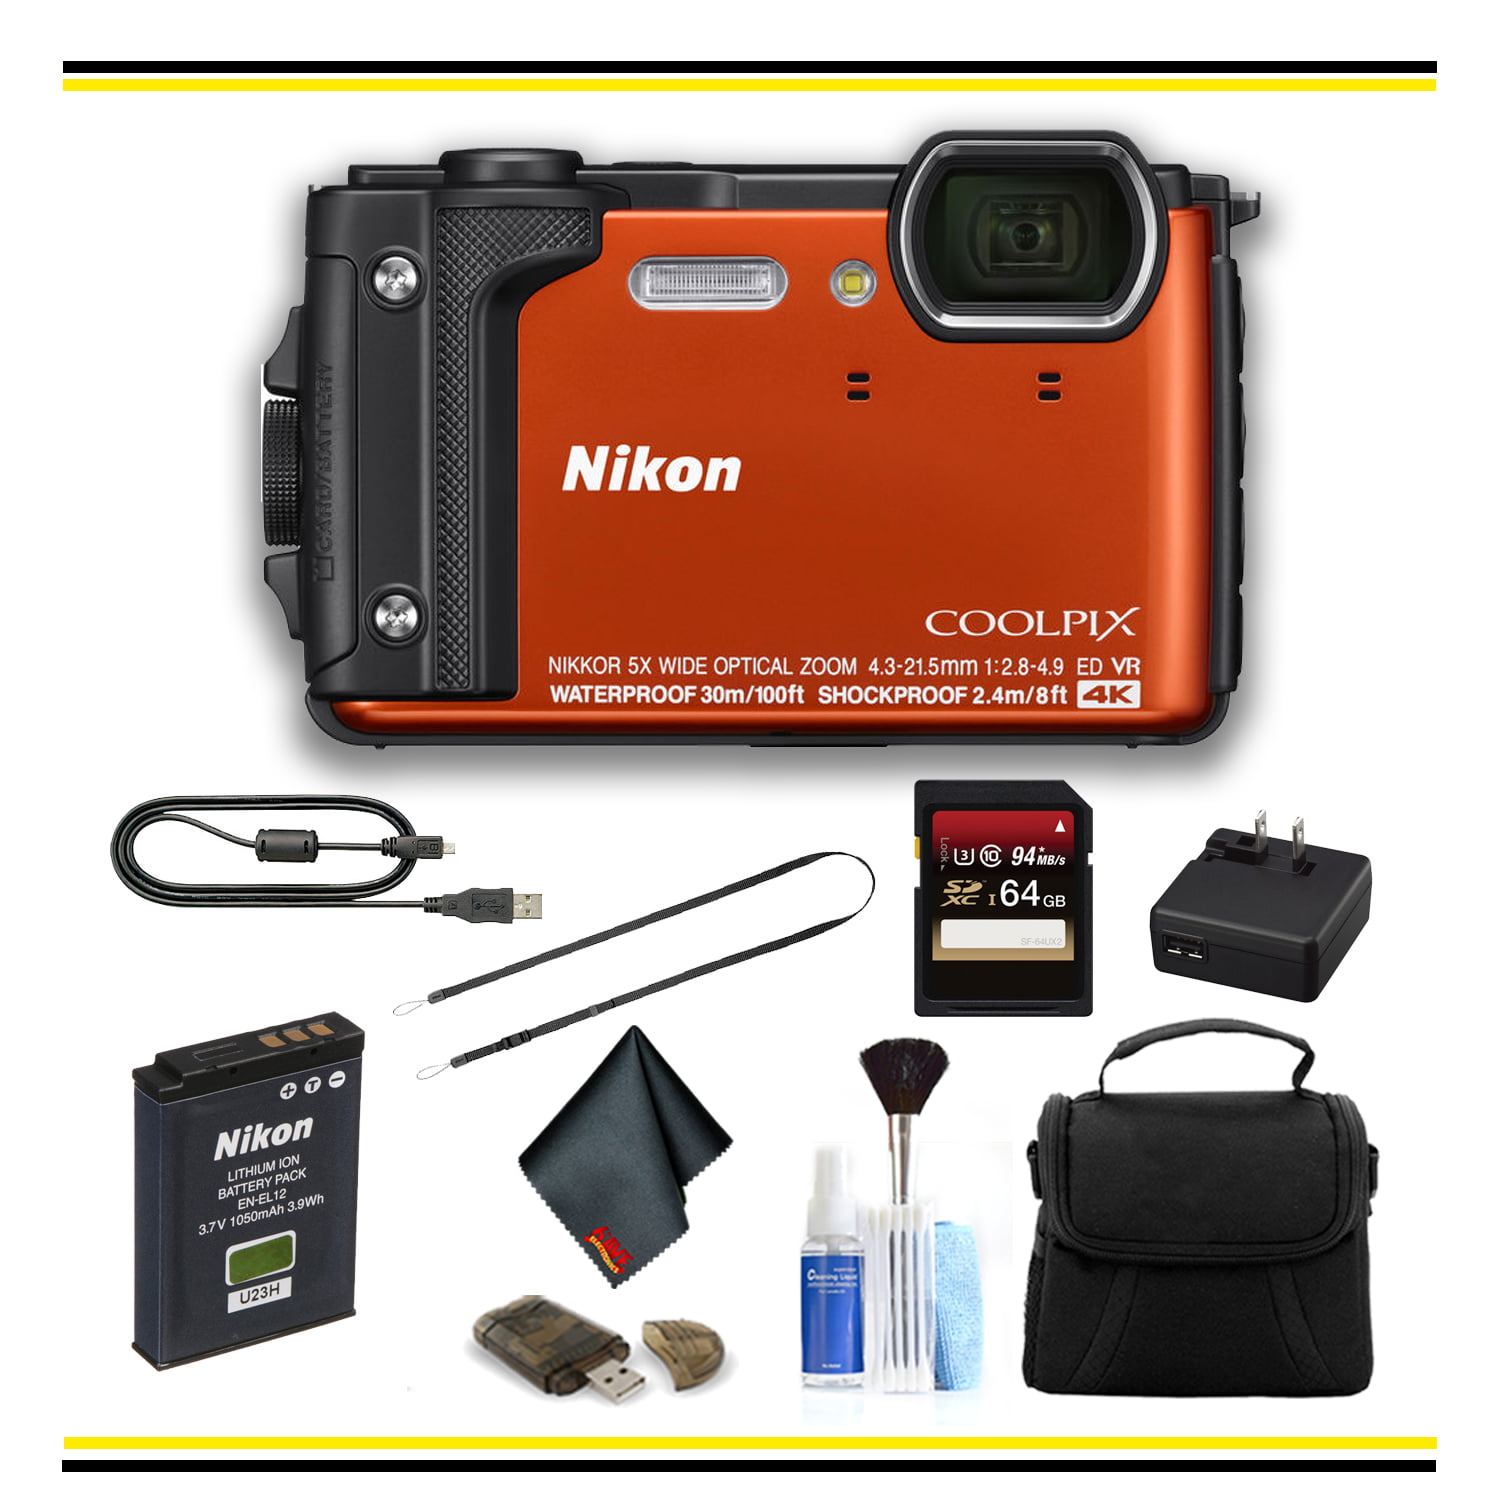 Nikon Coolpix W150 Digital Camera - Blue (Intl Model) with Camera 